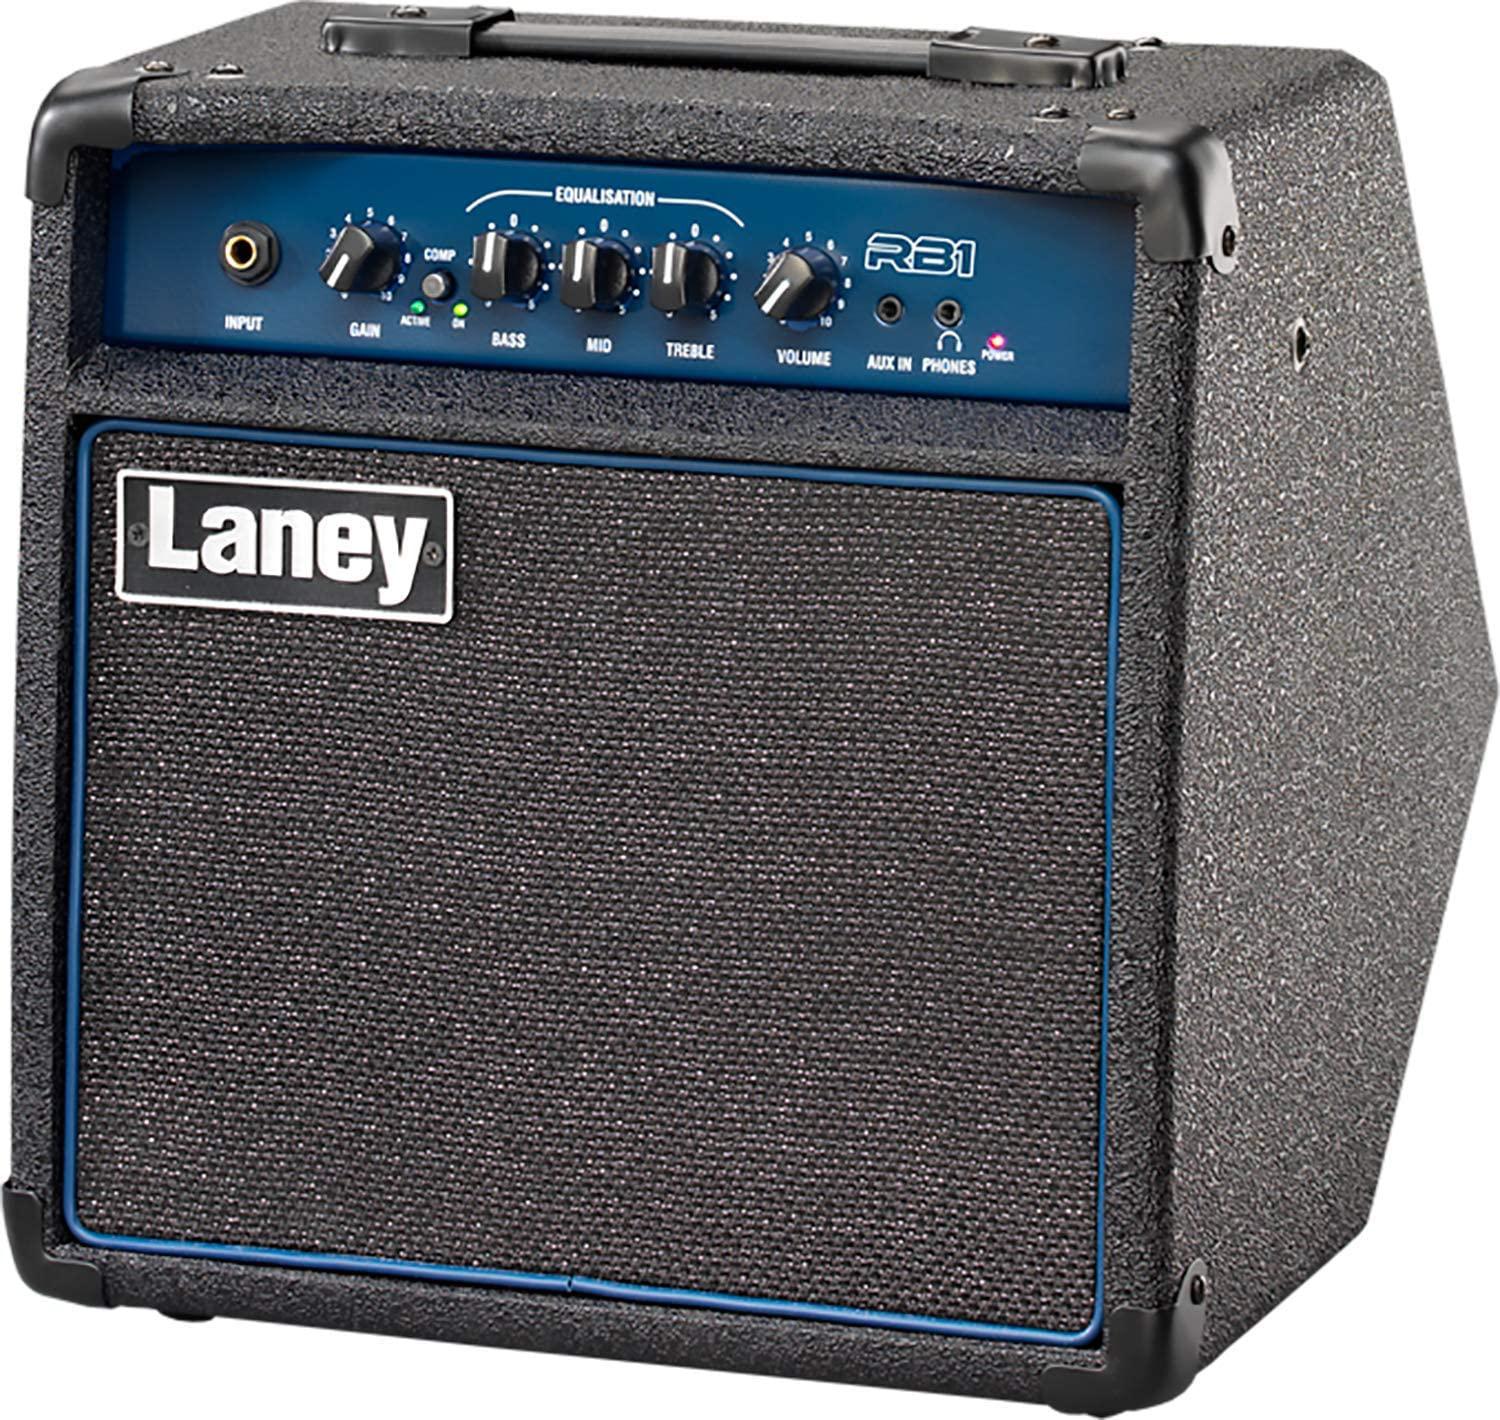 Laney - Combo Bajo Electrico Richter, 15 W 1 x 8 Mod.RB1_122